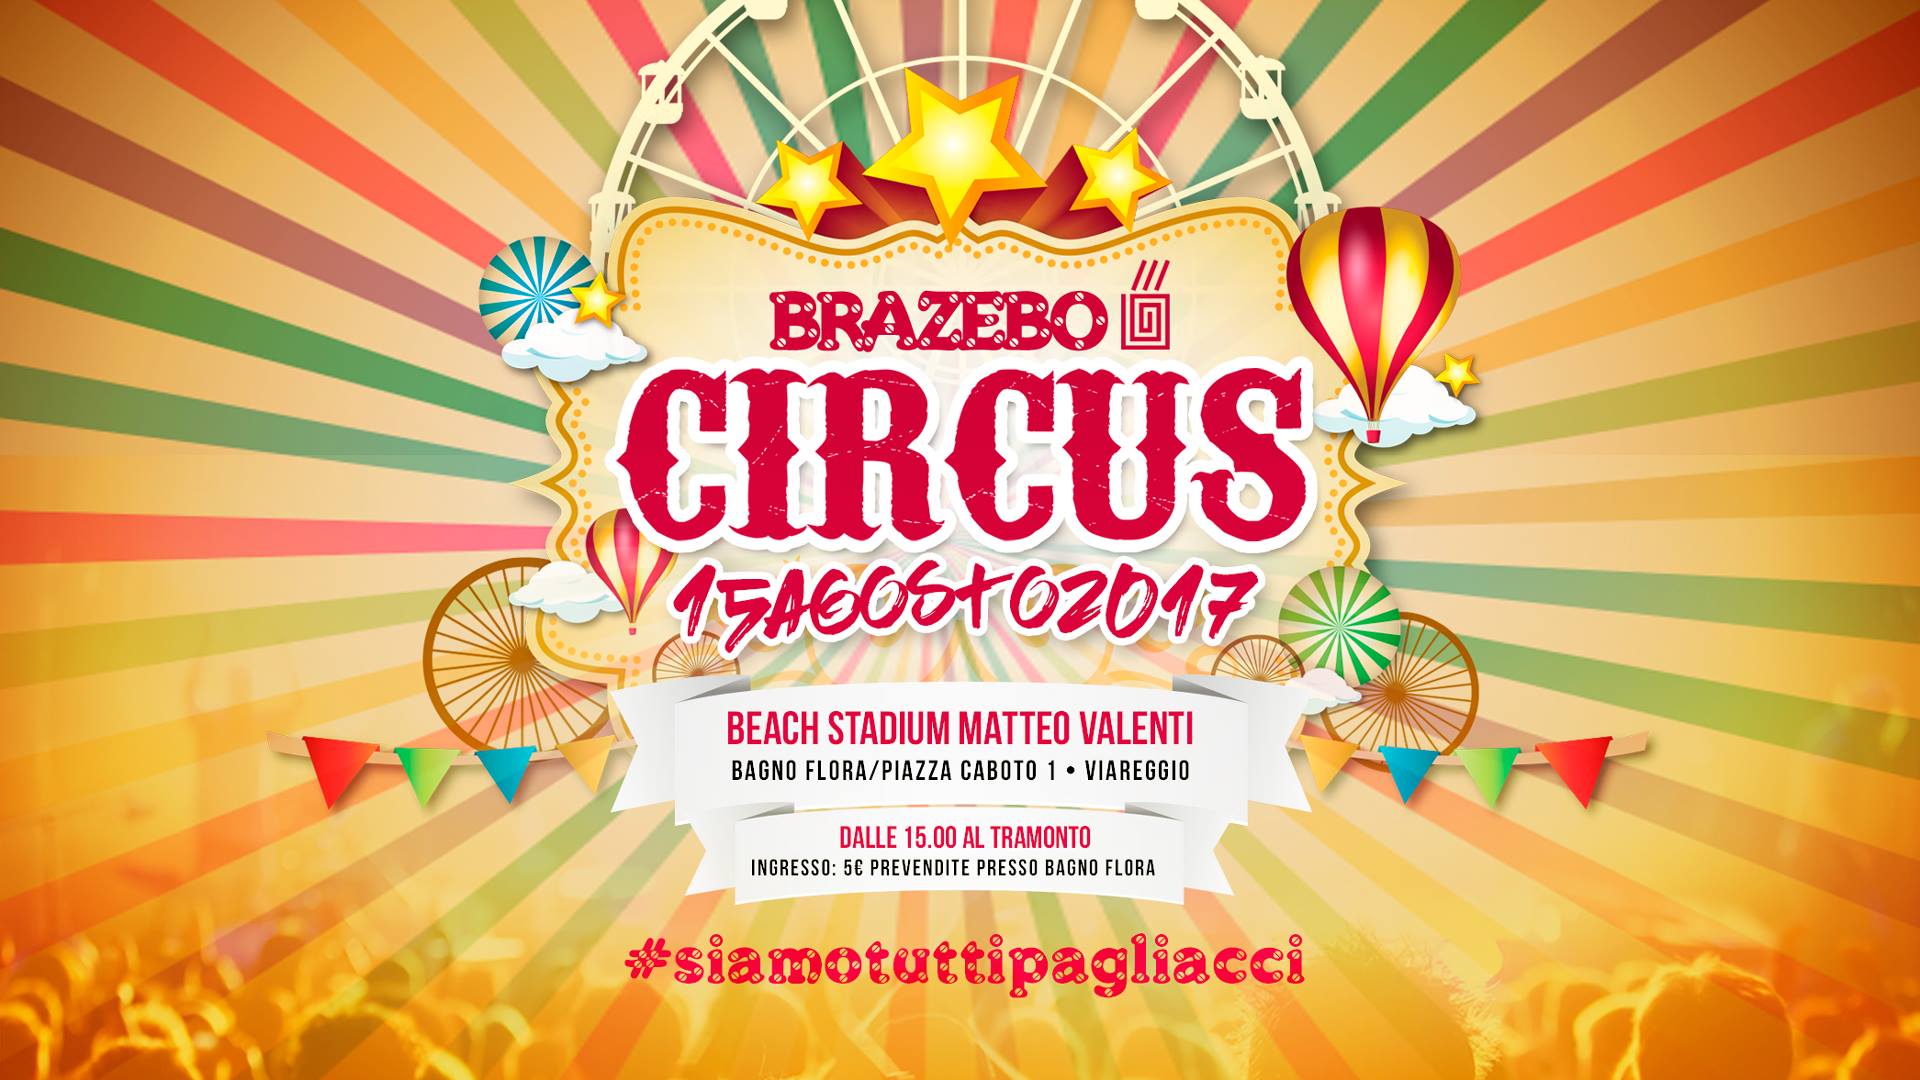 Brazebo 2017: Circus!